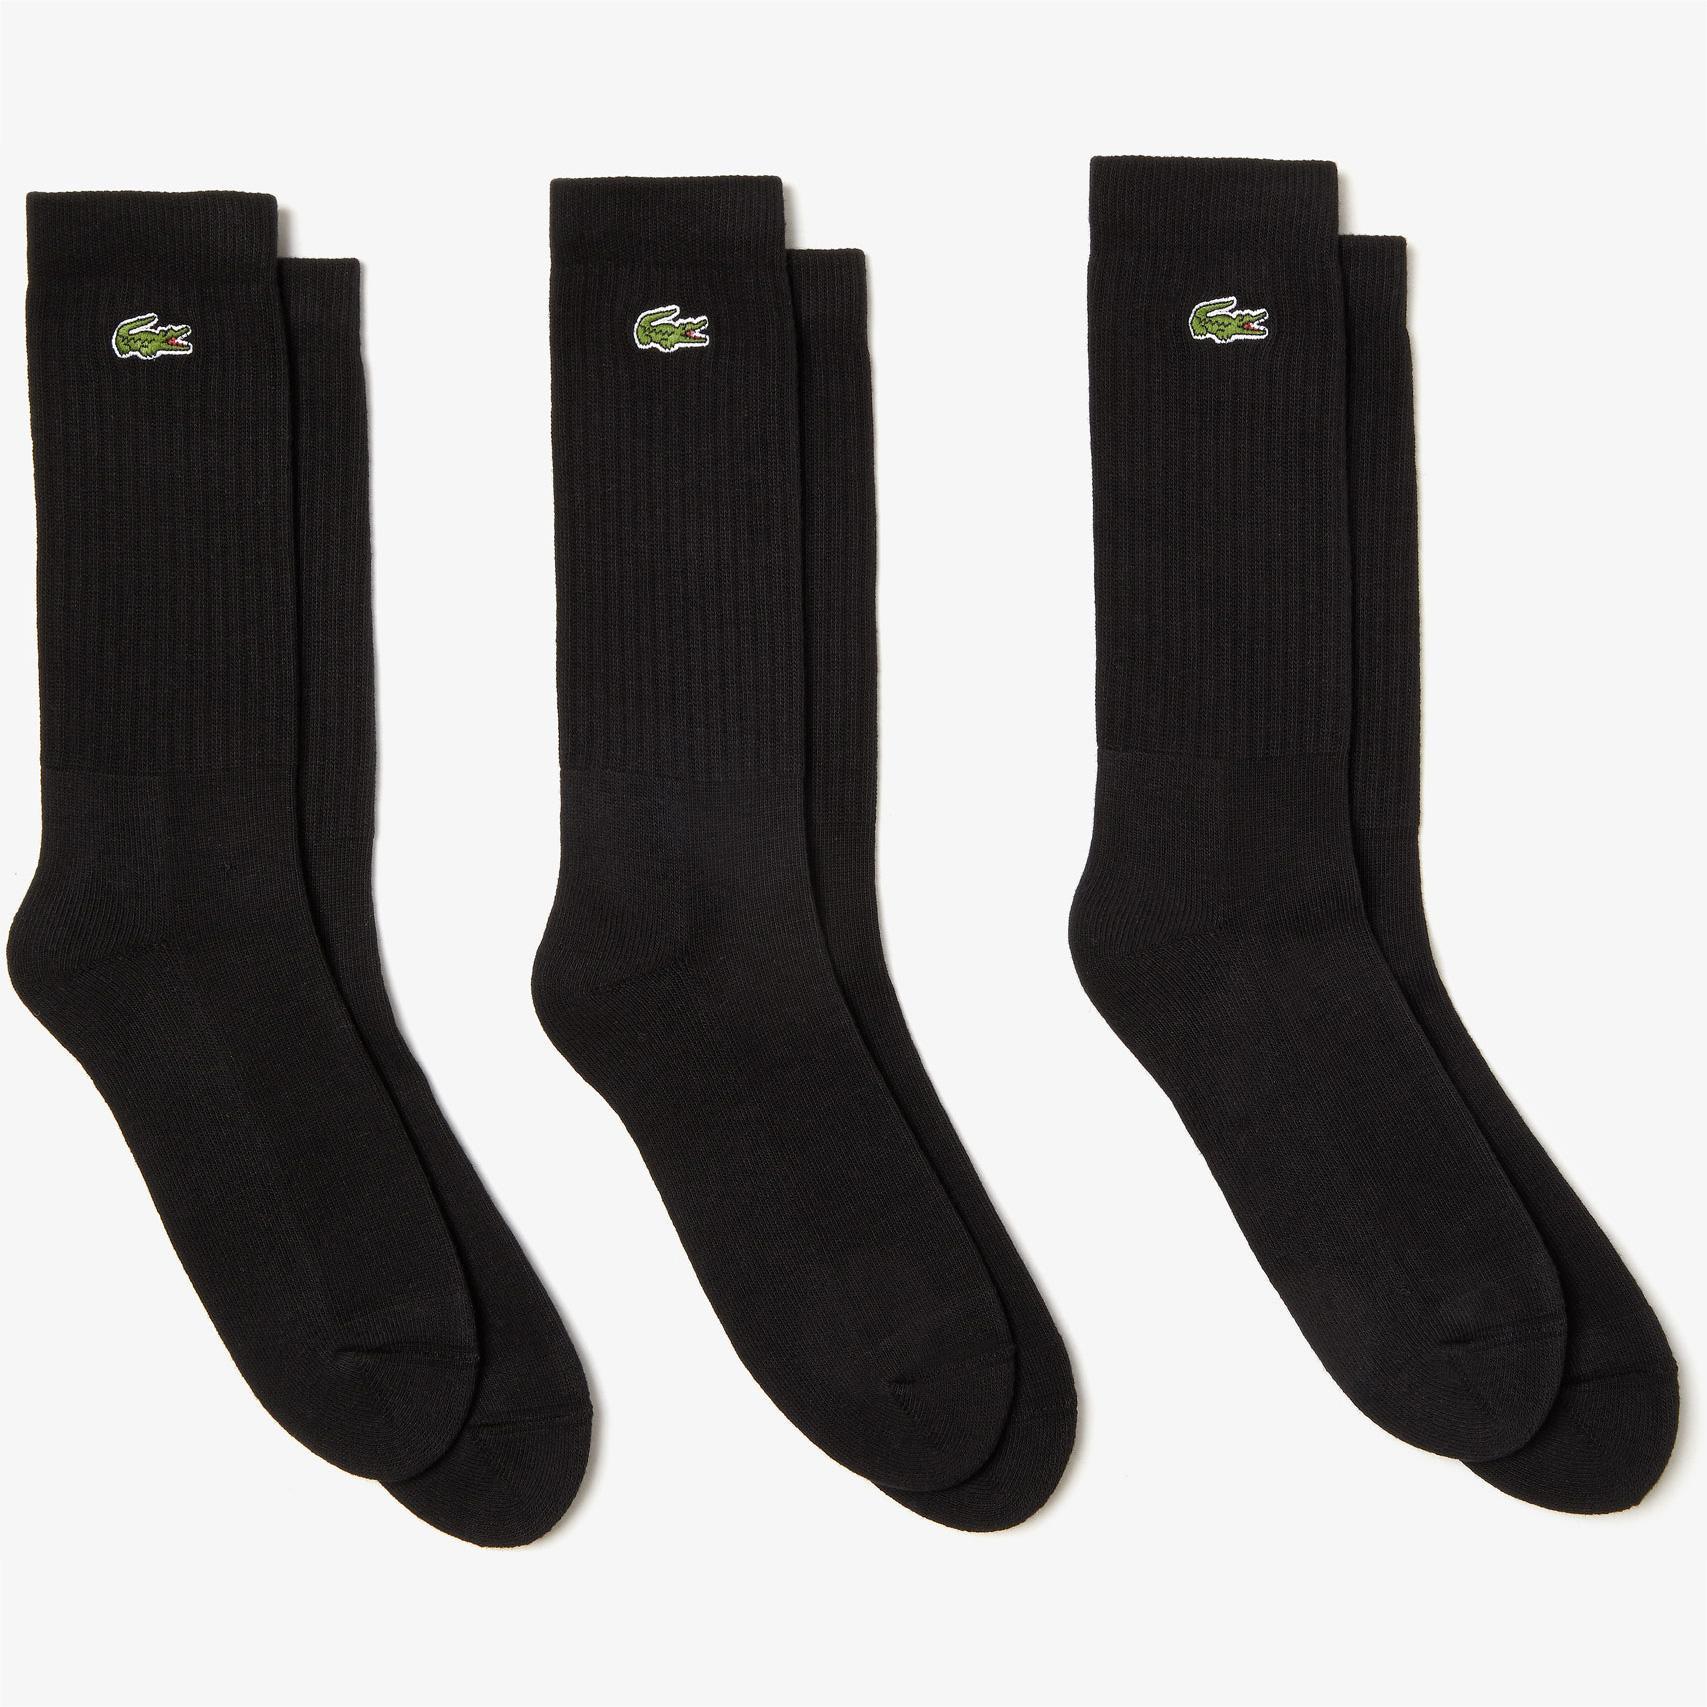 Lacoste Mens Sport Socks (3 Pairs) - Black - Tennisnuts.com